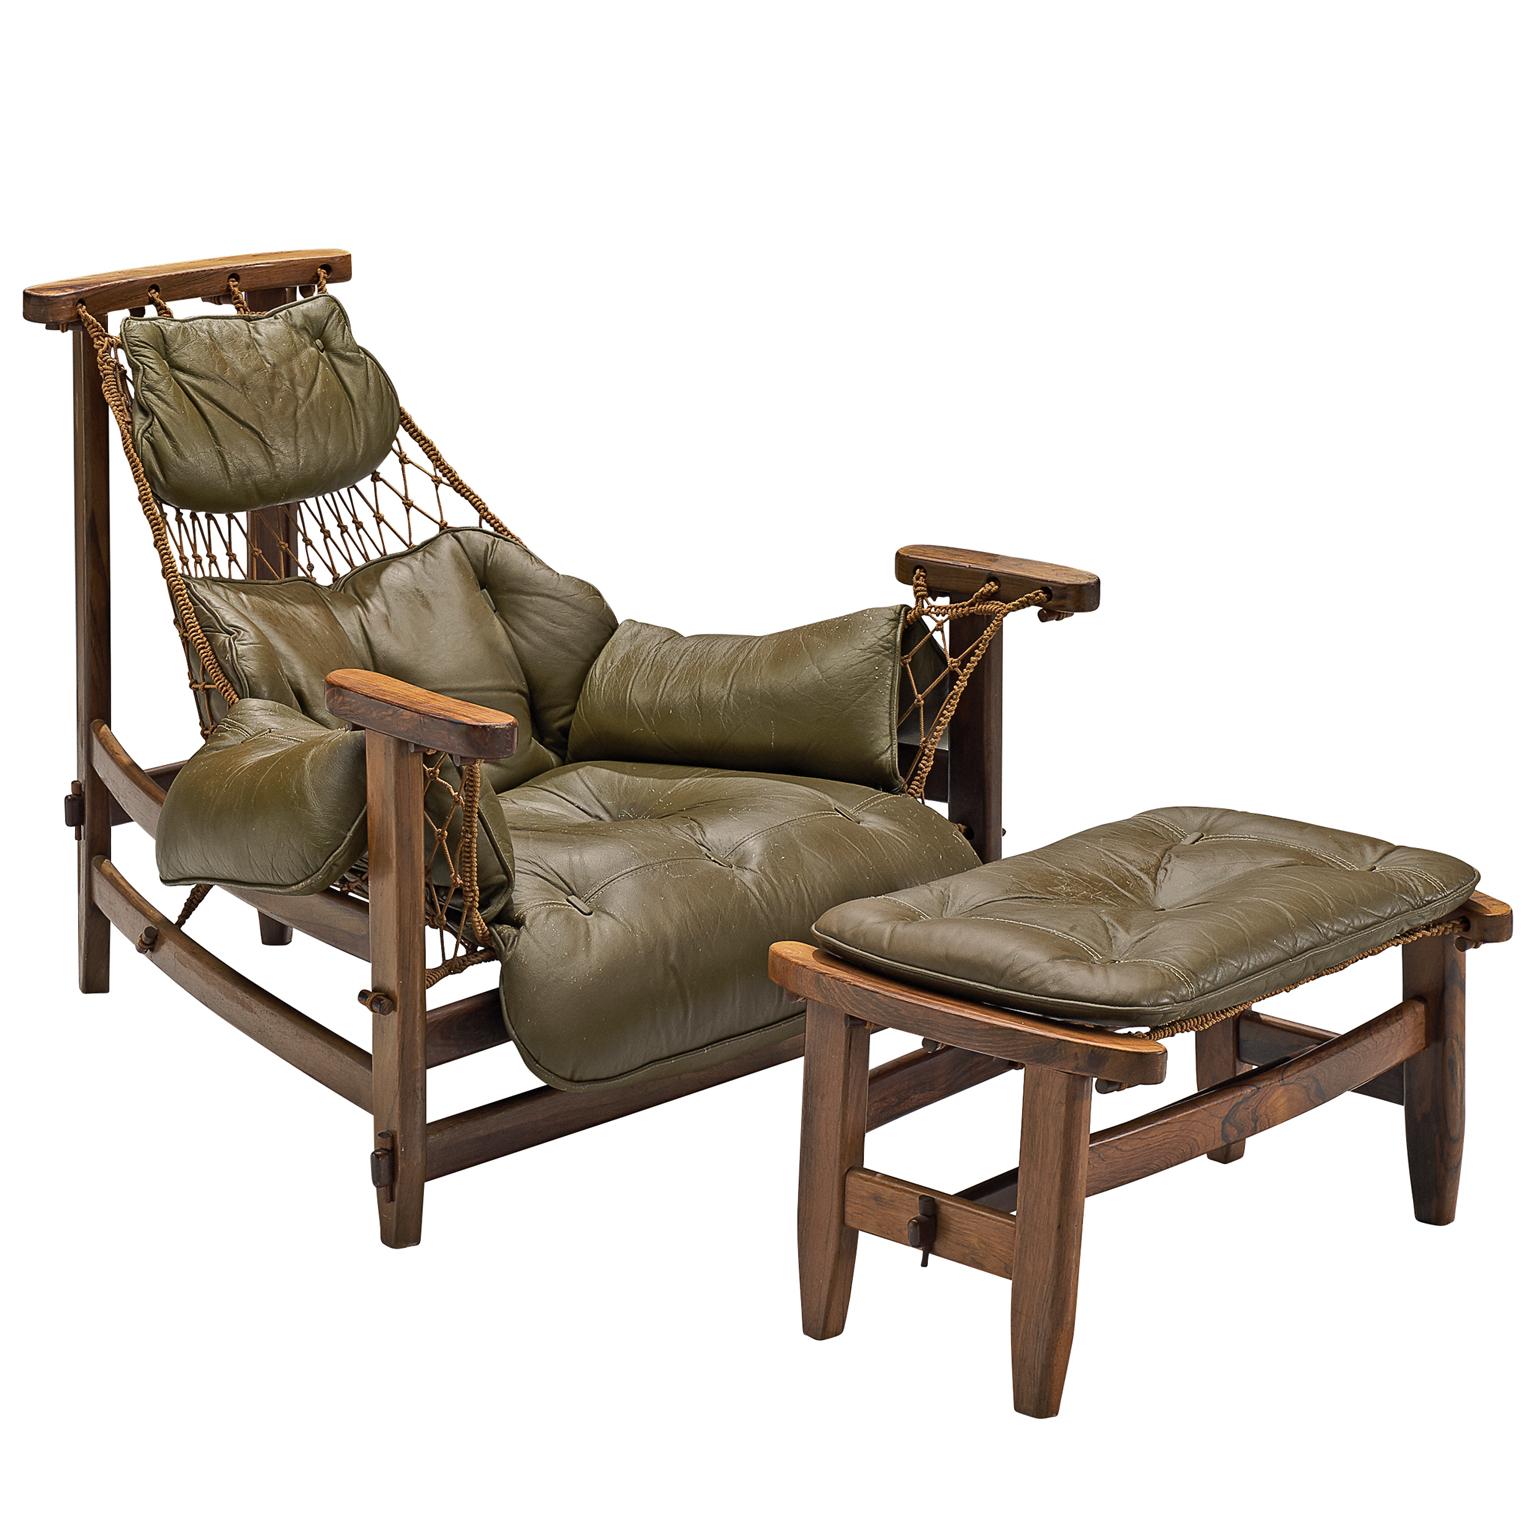 Jean Gillon Jangada Lounge Chair with Ottoman